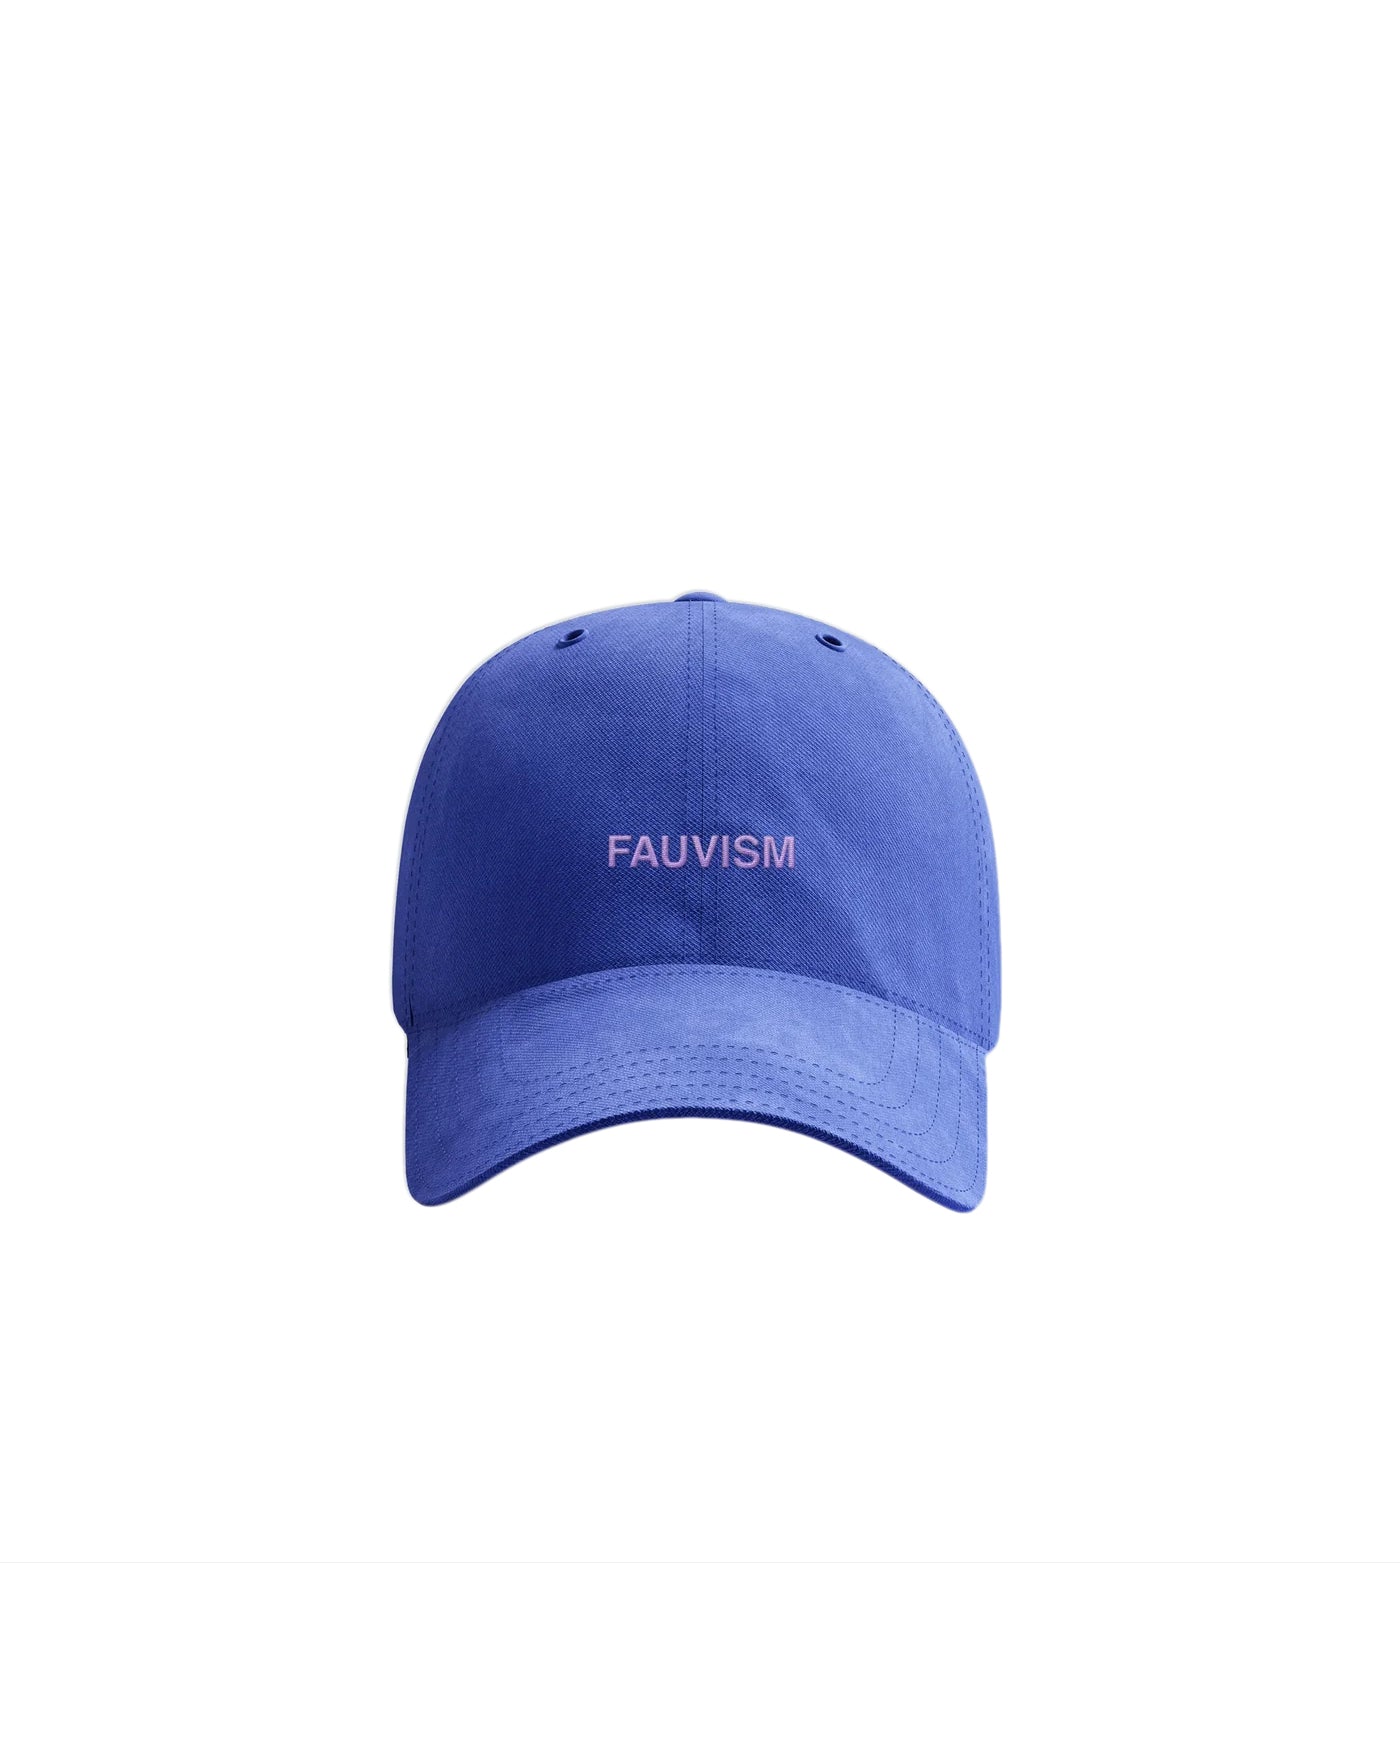 Fauvism Dad Hat